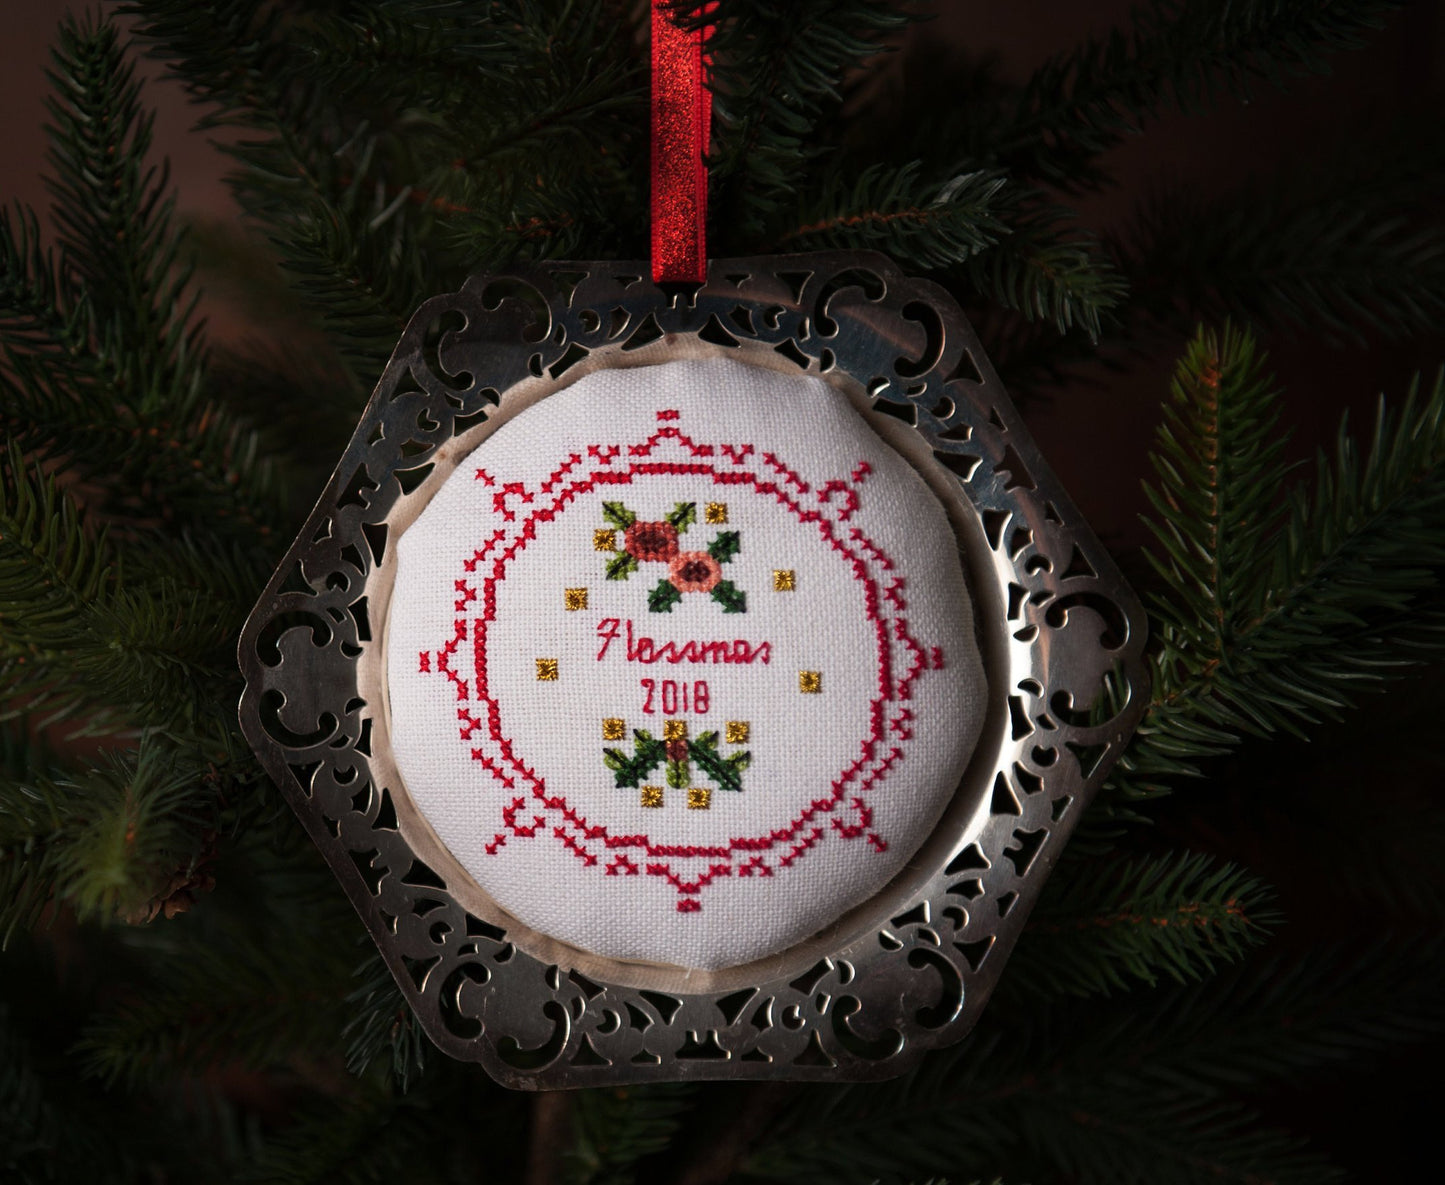 Flossmas Flossukkah 2018 Christmas Ornament